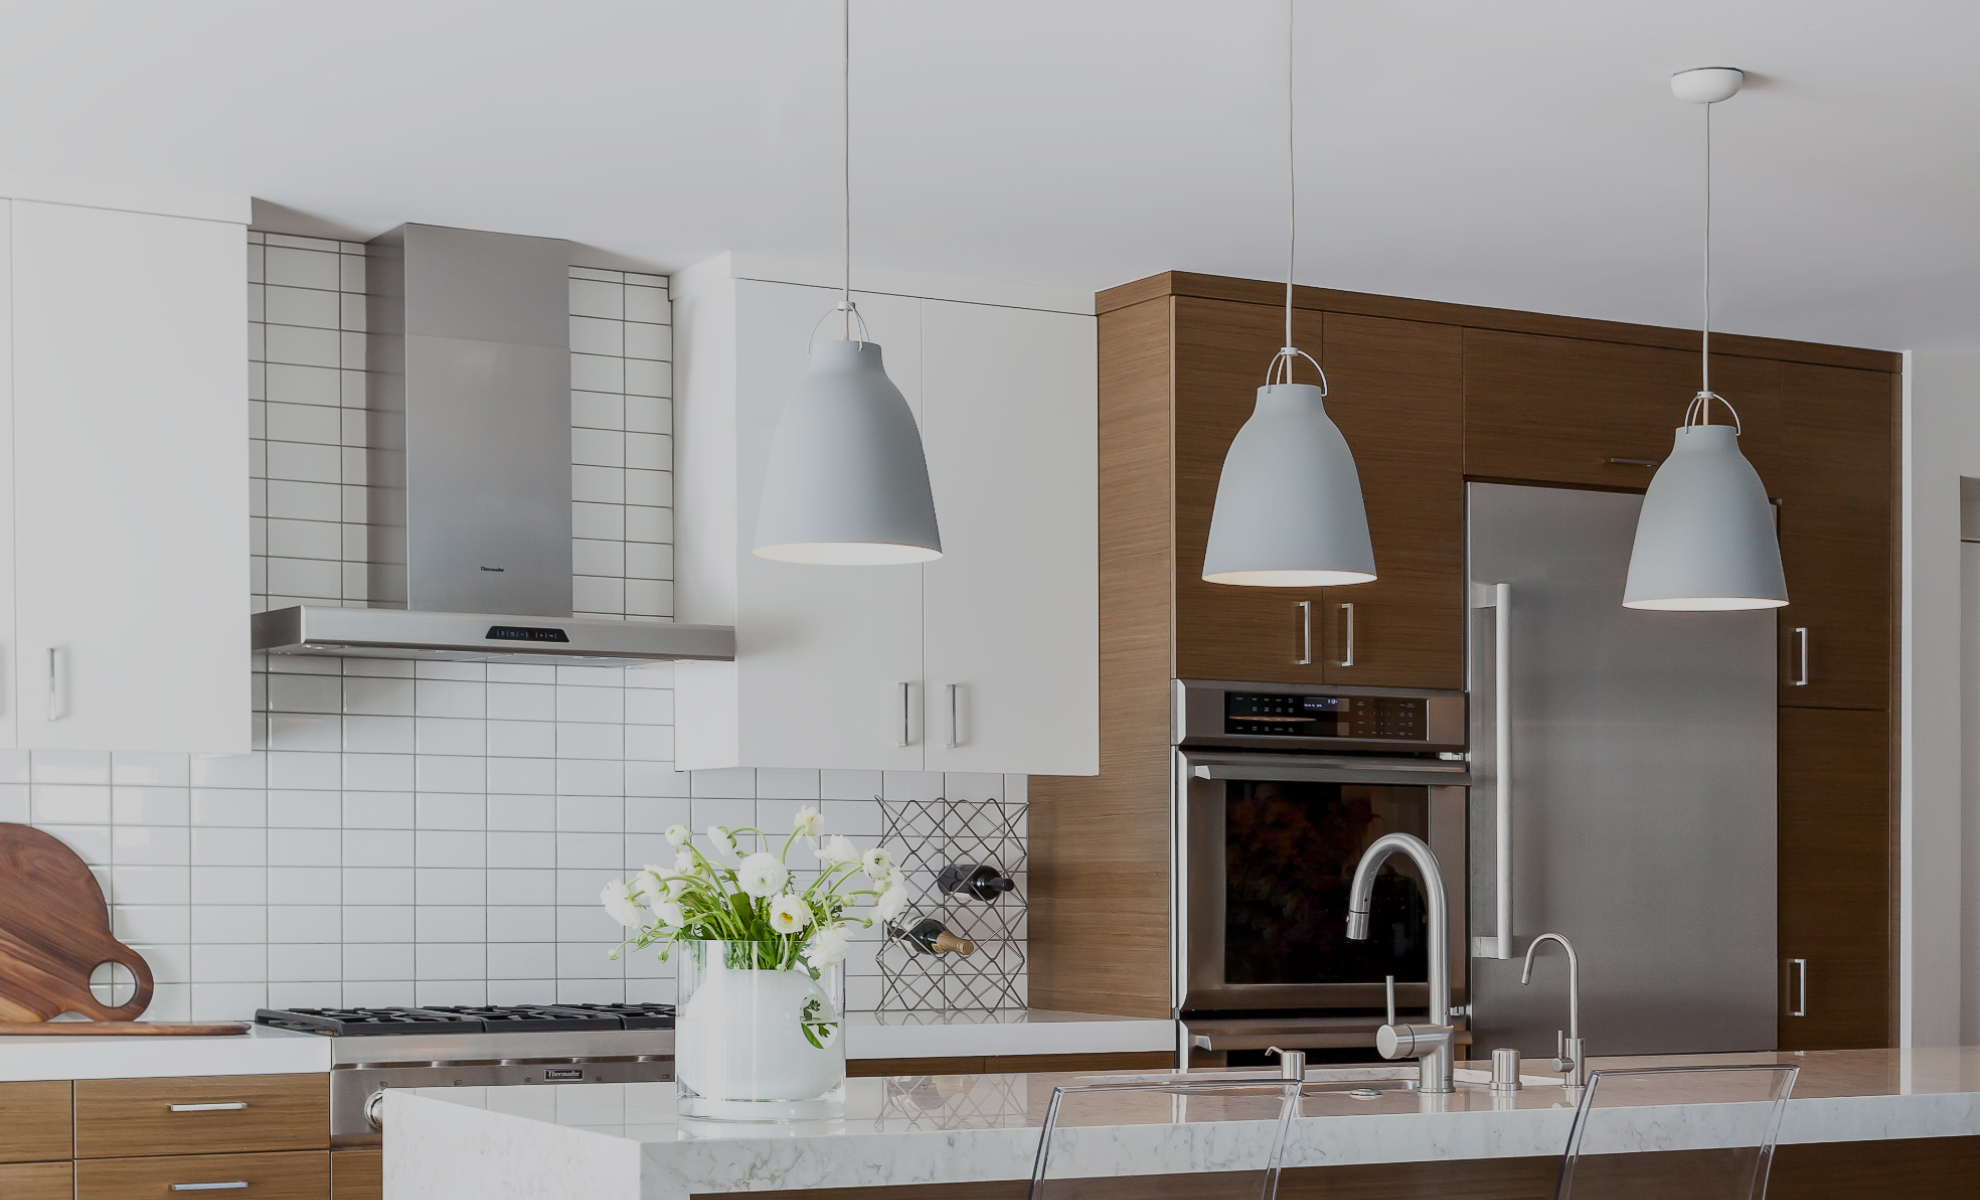 Kitchen Pendant Lighting Ideas | How To's & Advice at Lumens.com